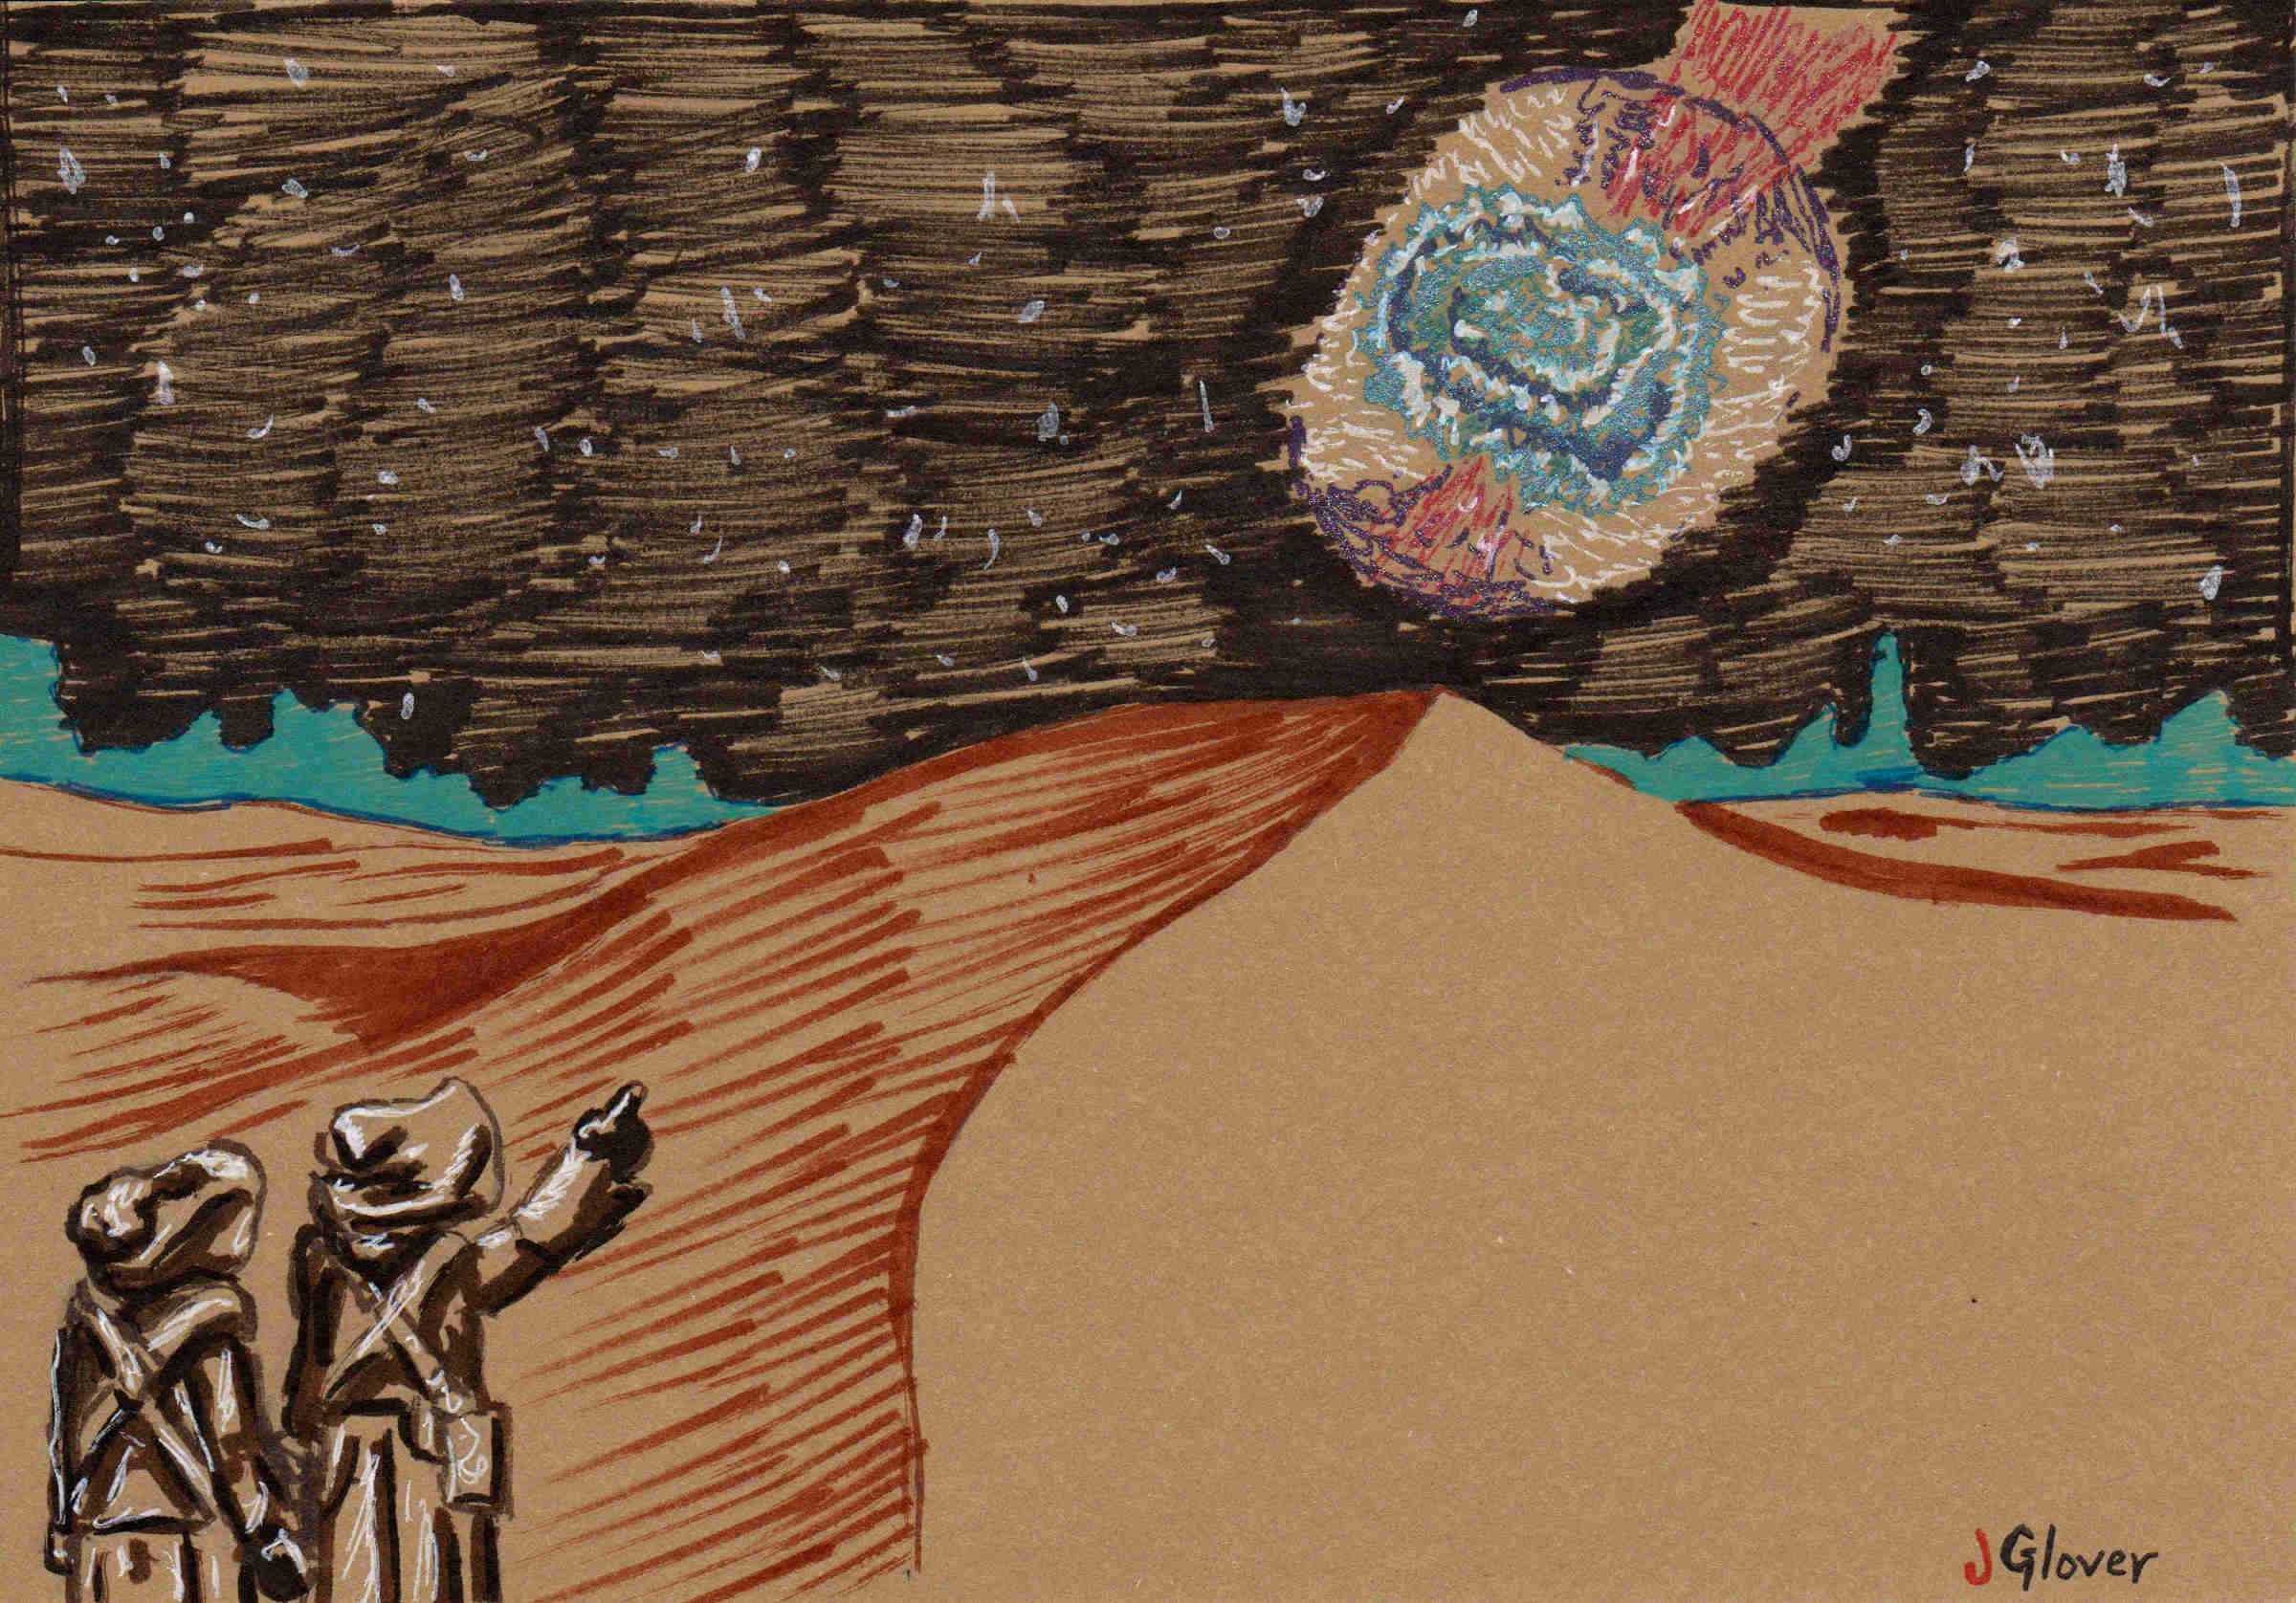 Jawas in the desert - Ink Drawing - Star Wars Art - Illustration -